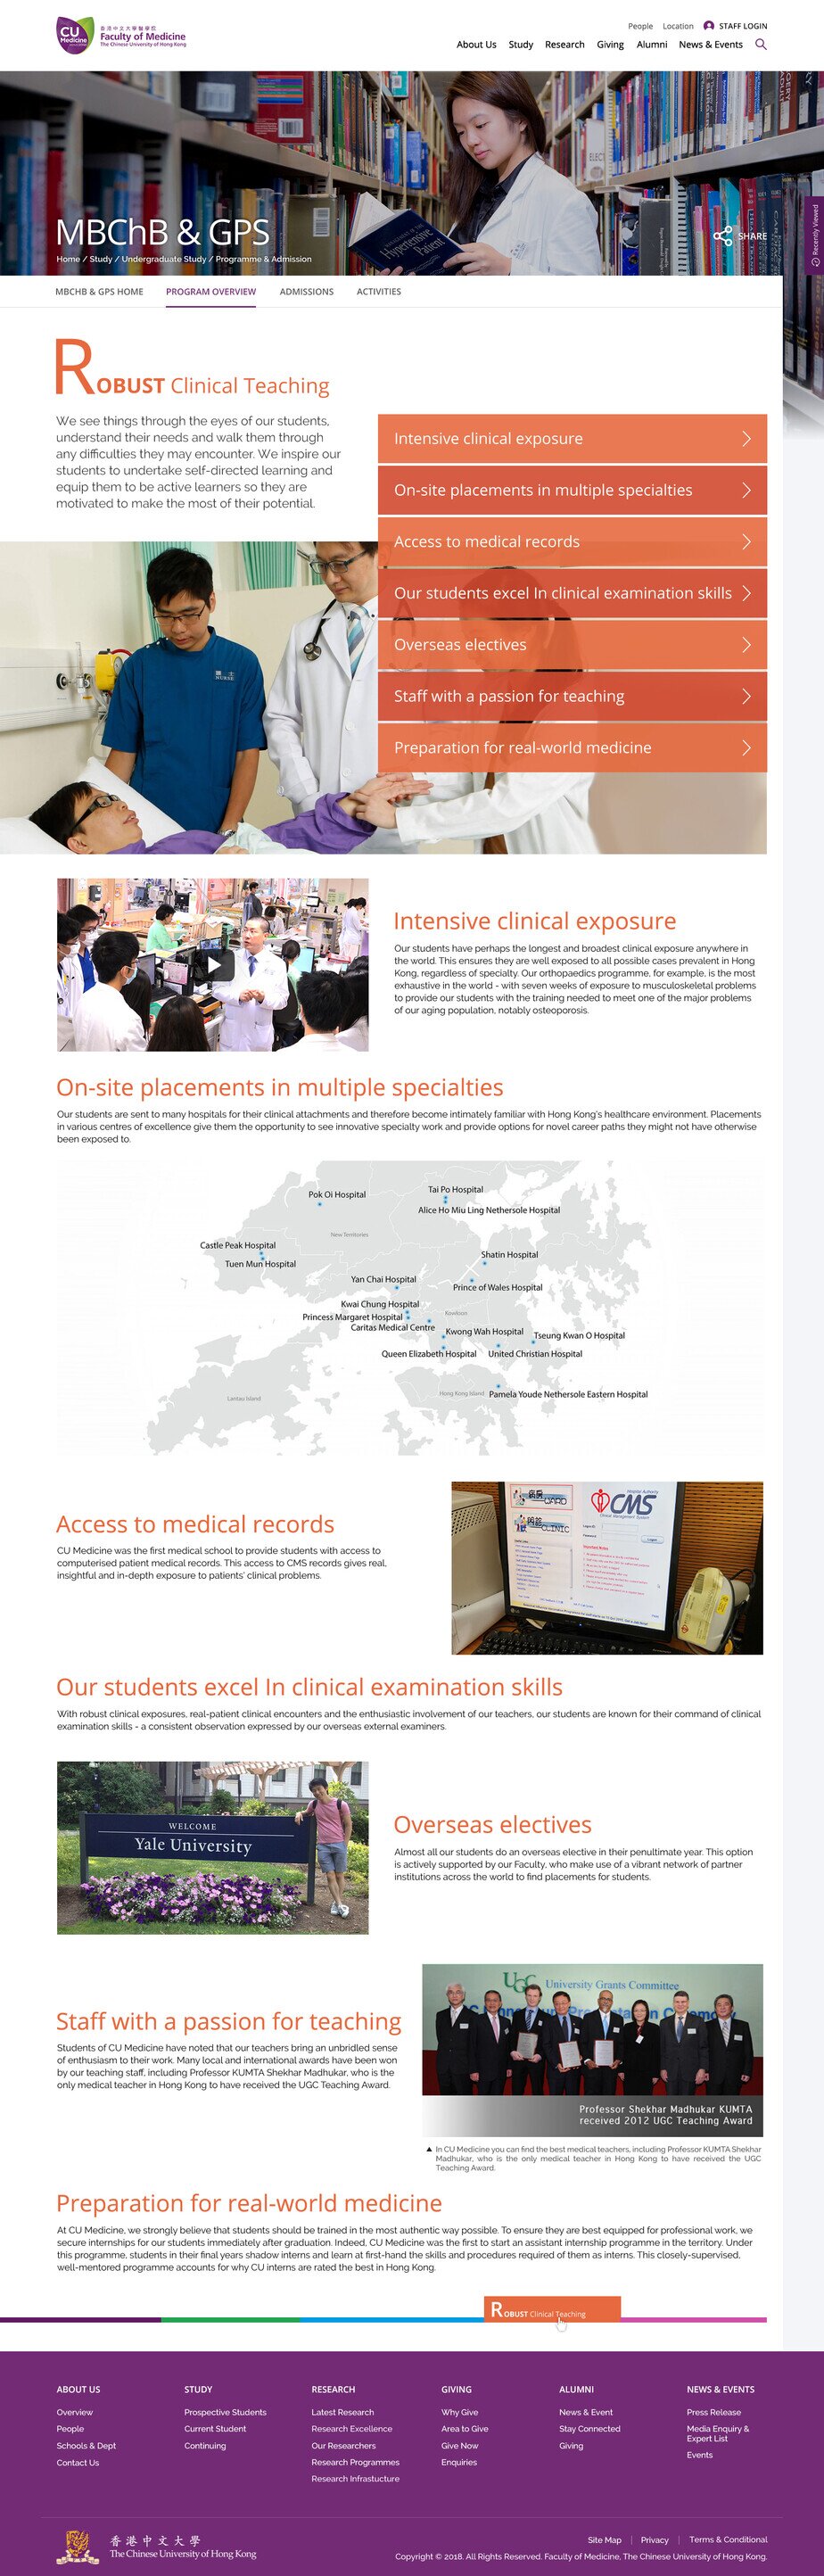 CUHK Faculty of Medicine Desktop MBChB & GPS Overview